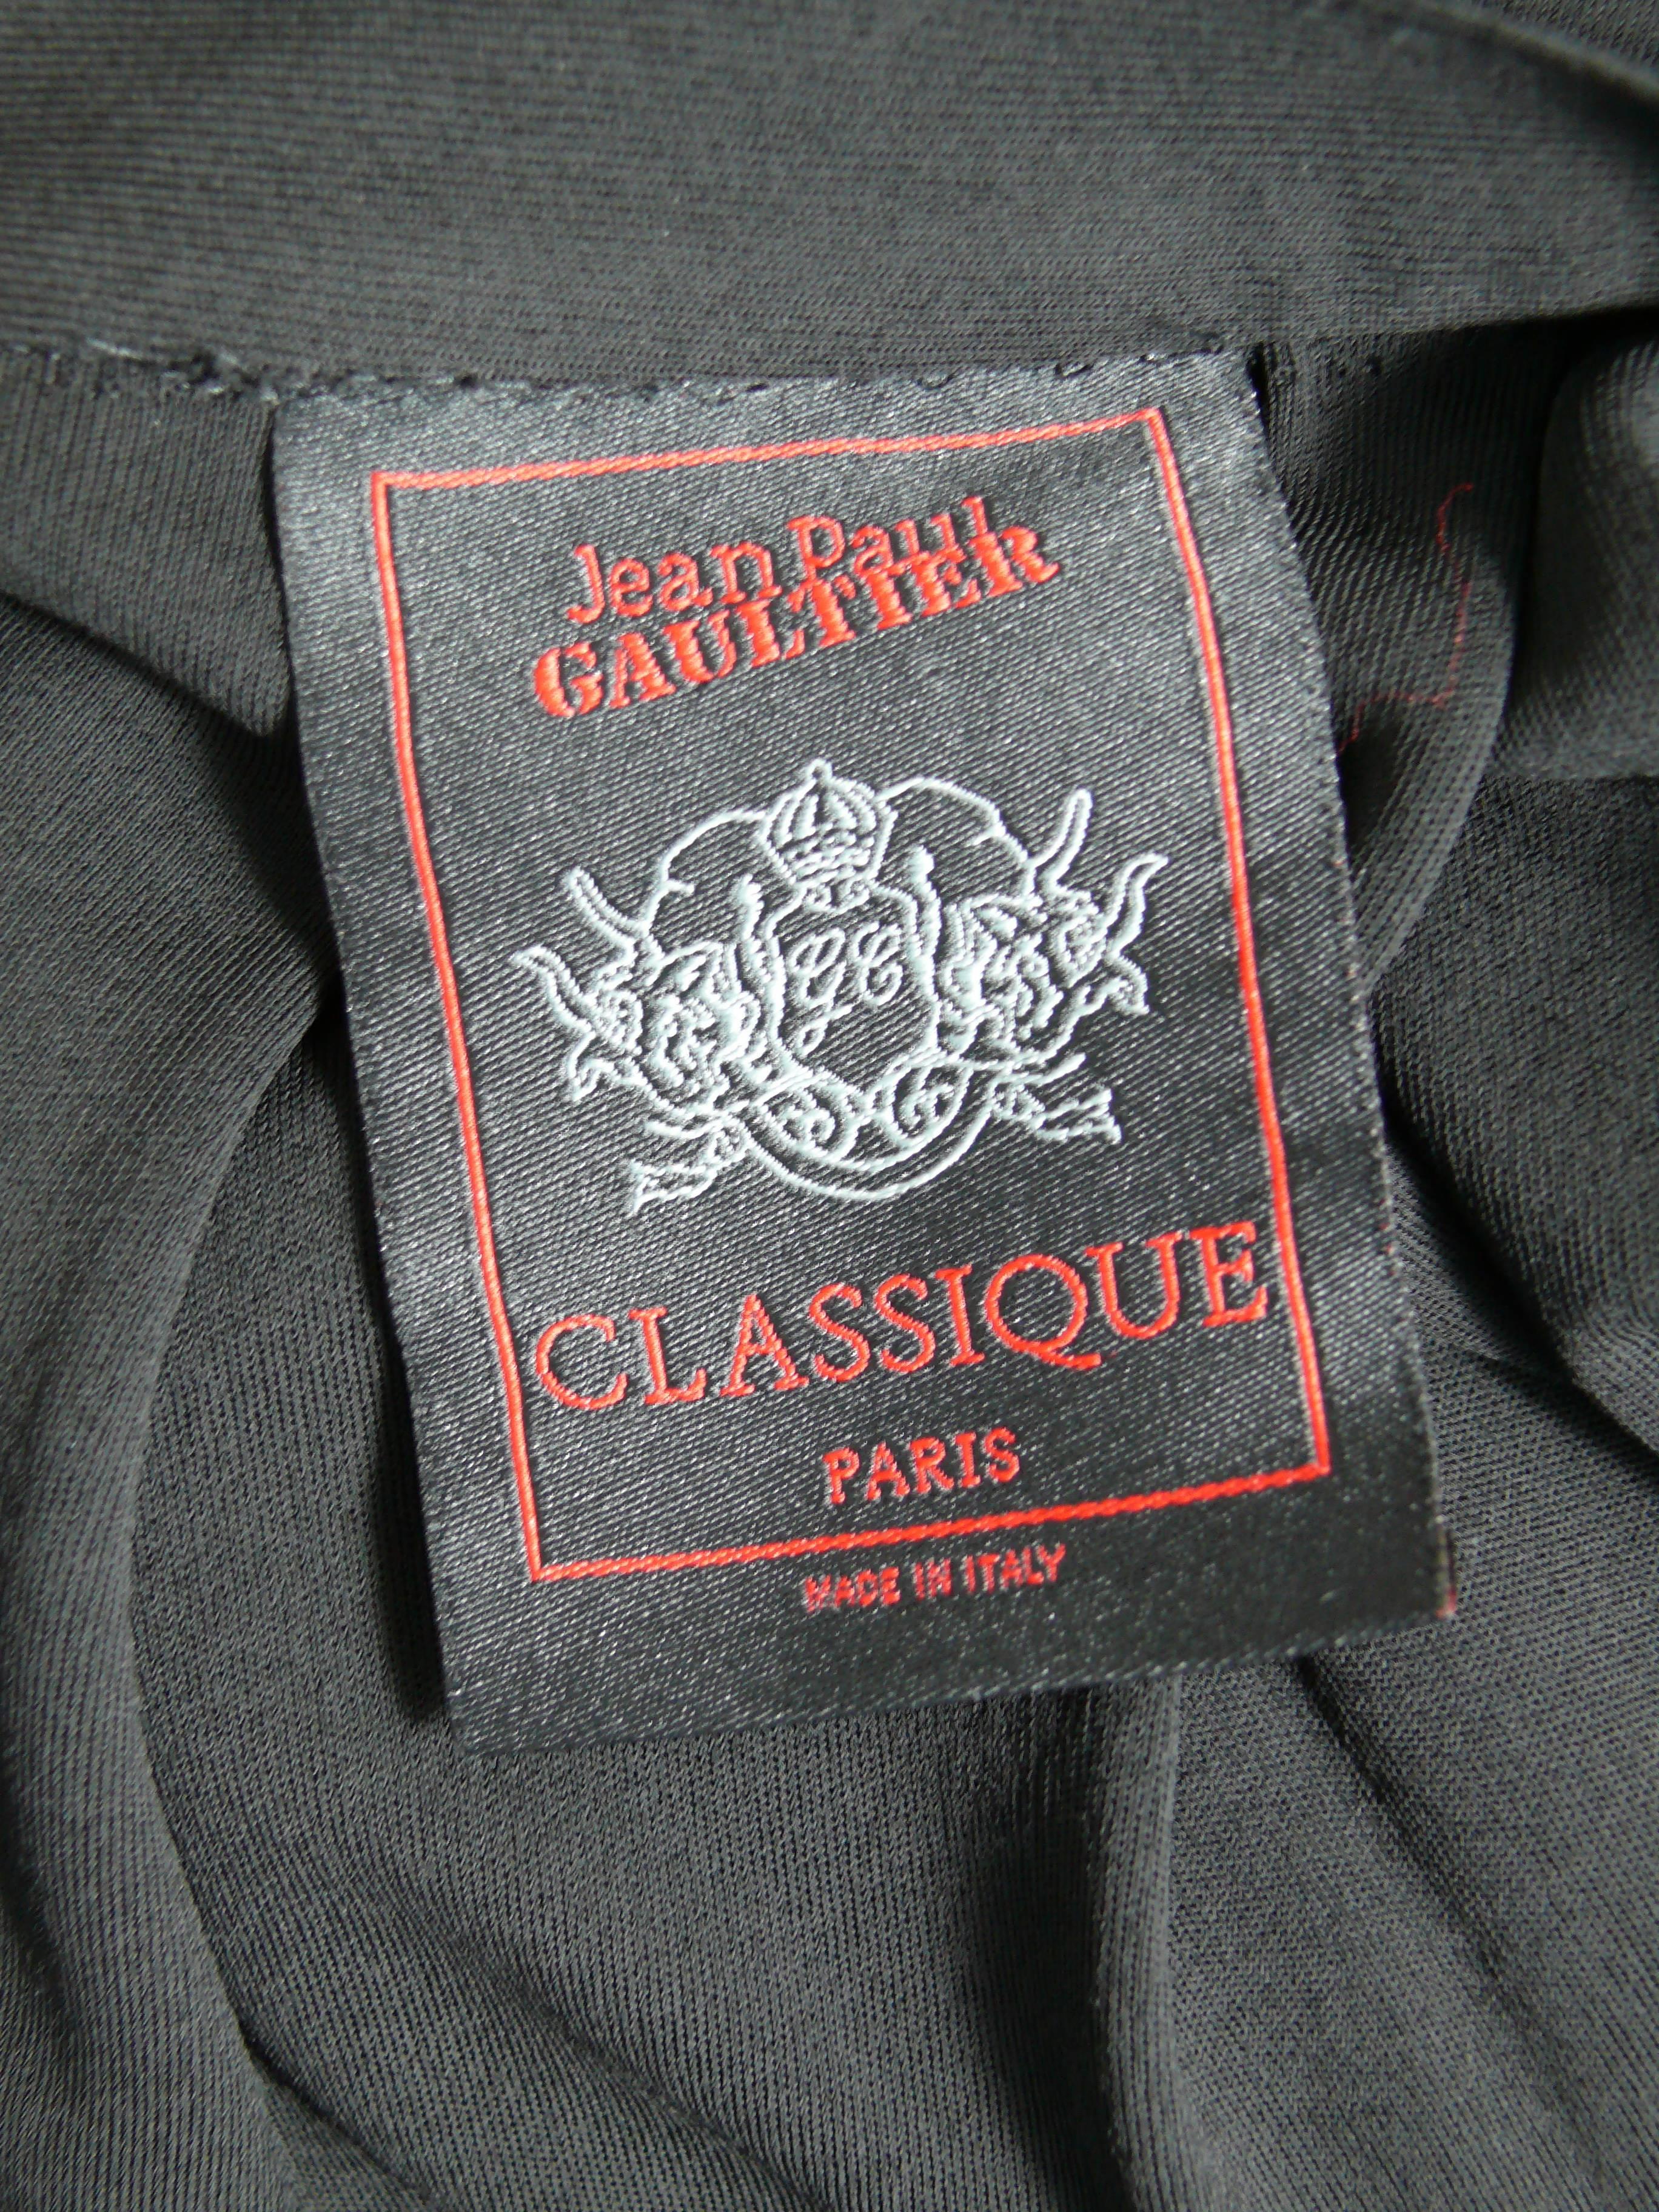 Jean Paul Gaultier Classique Vintage 1990s Rare Black Padded Skirt  For Sale 2